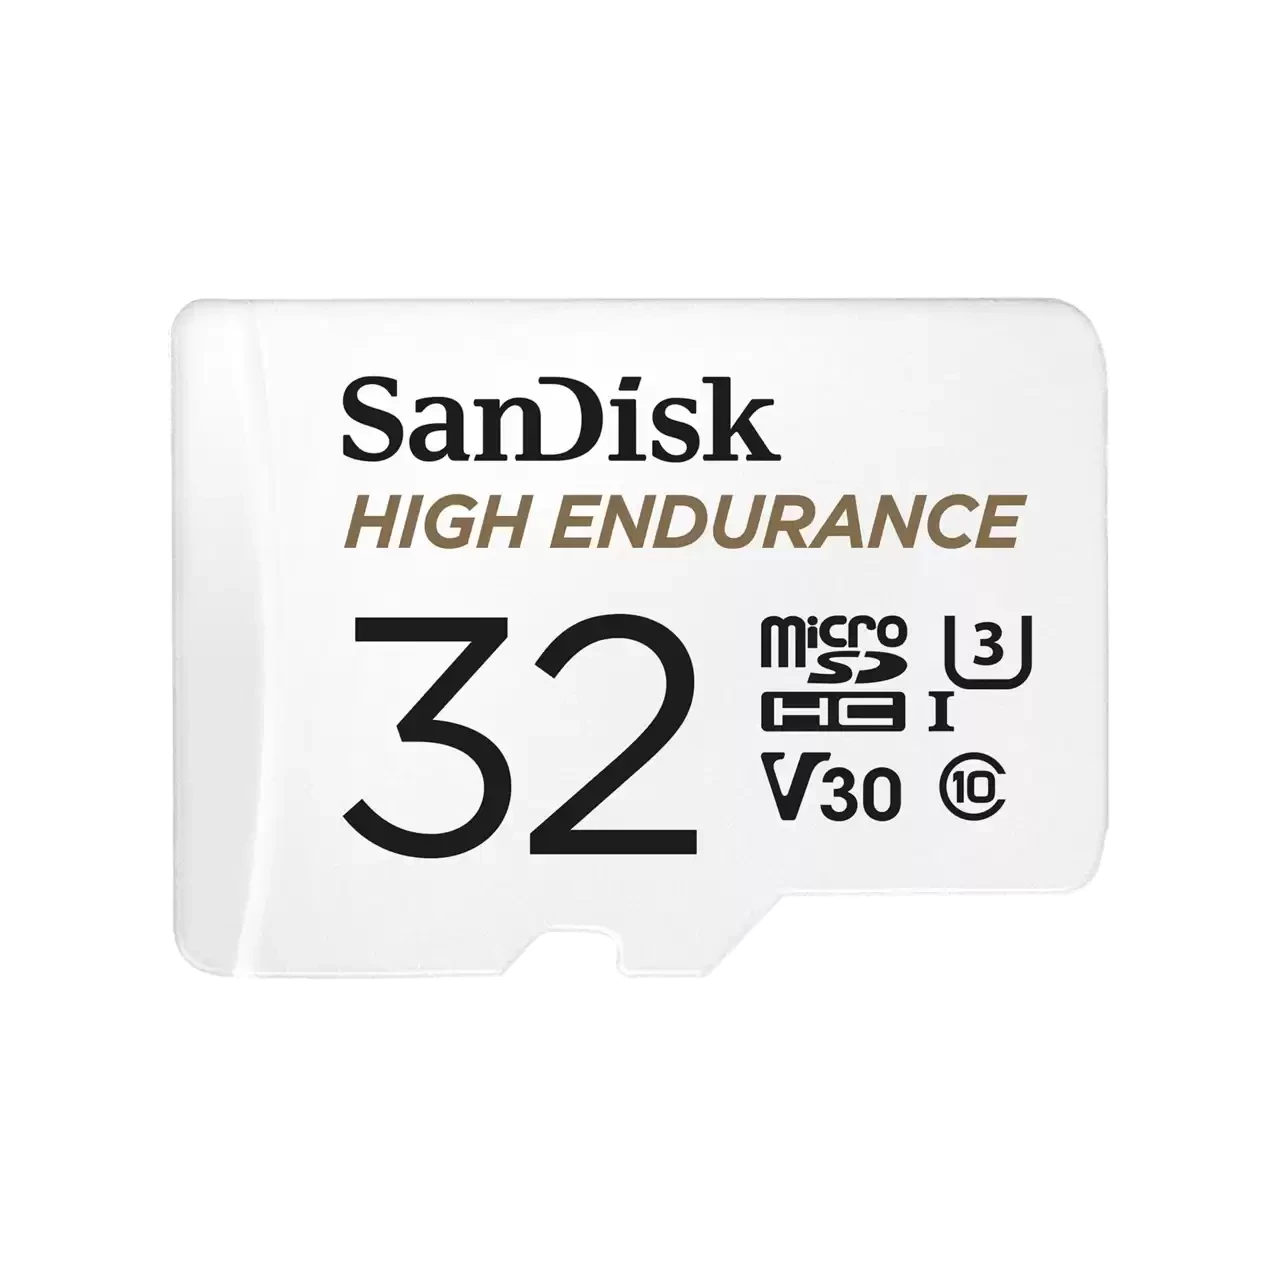 Sandisk High Endurance 32Gb MicroSDHC UHS-I Memory Card